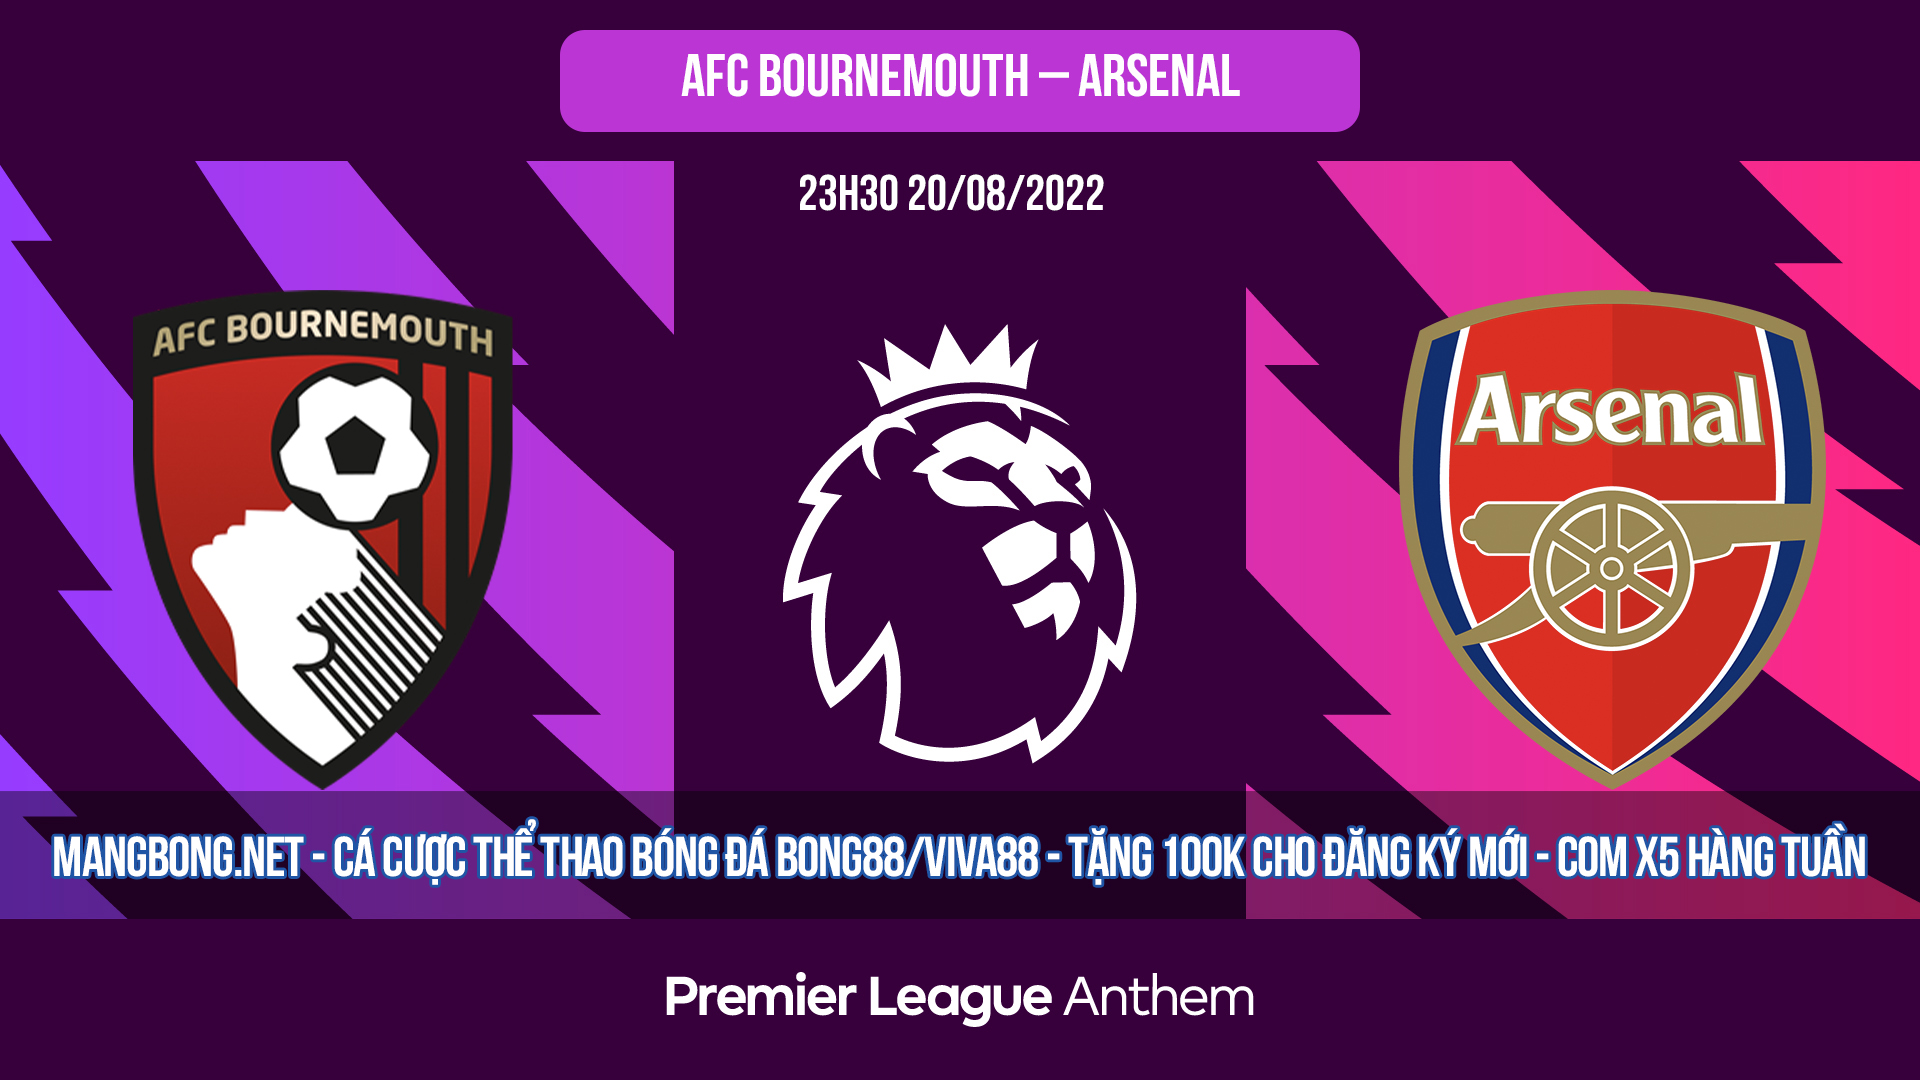 Soi kèo bóng đá AFC Bournemouth vs Arsenal – 23h30 20/08/2022